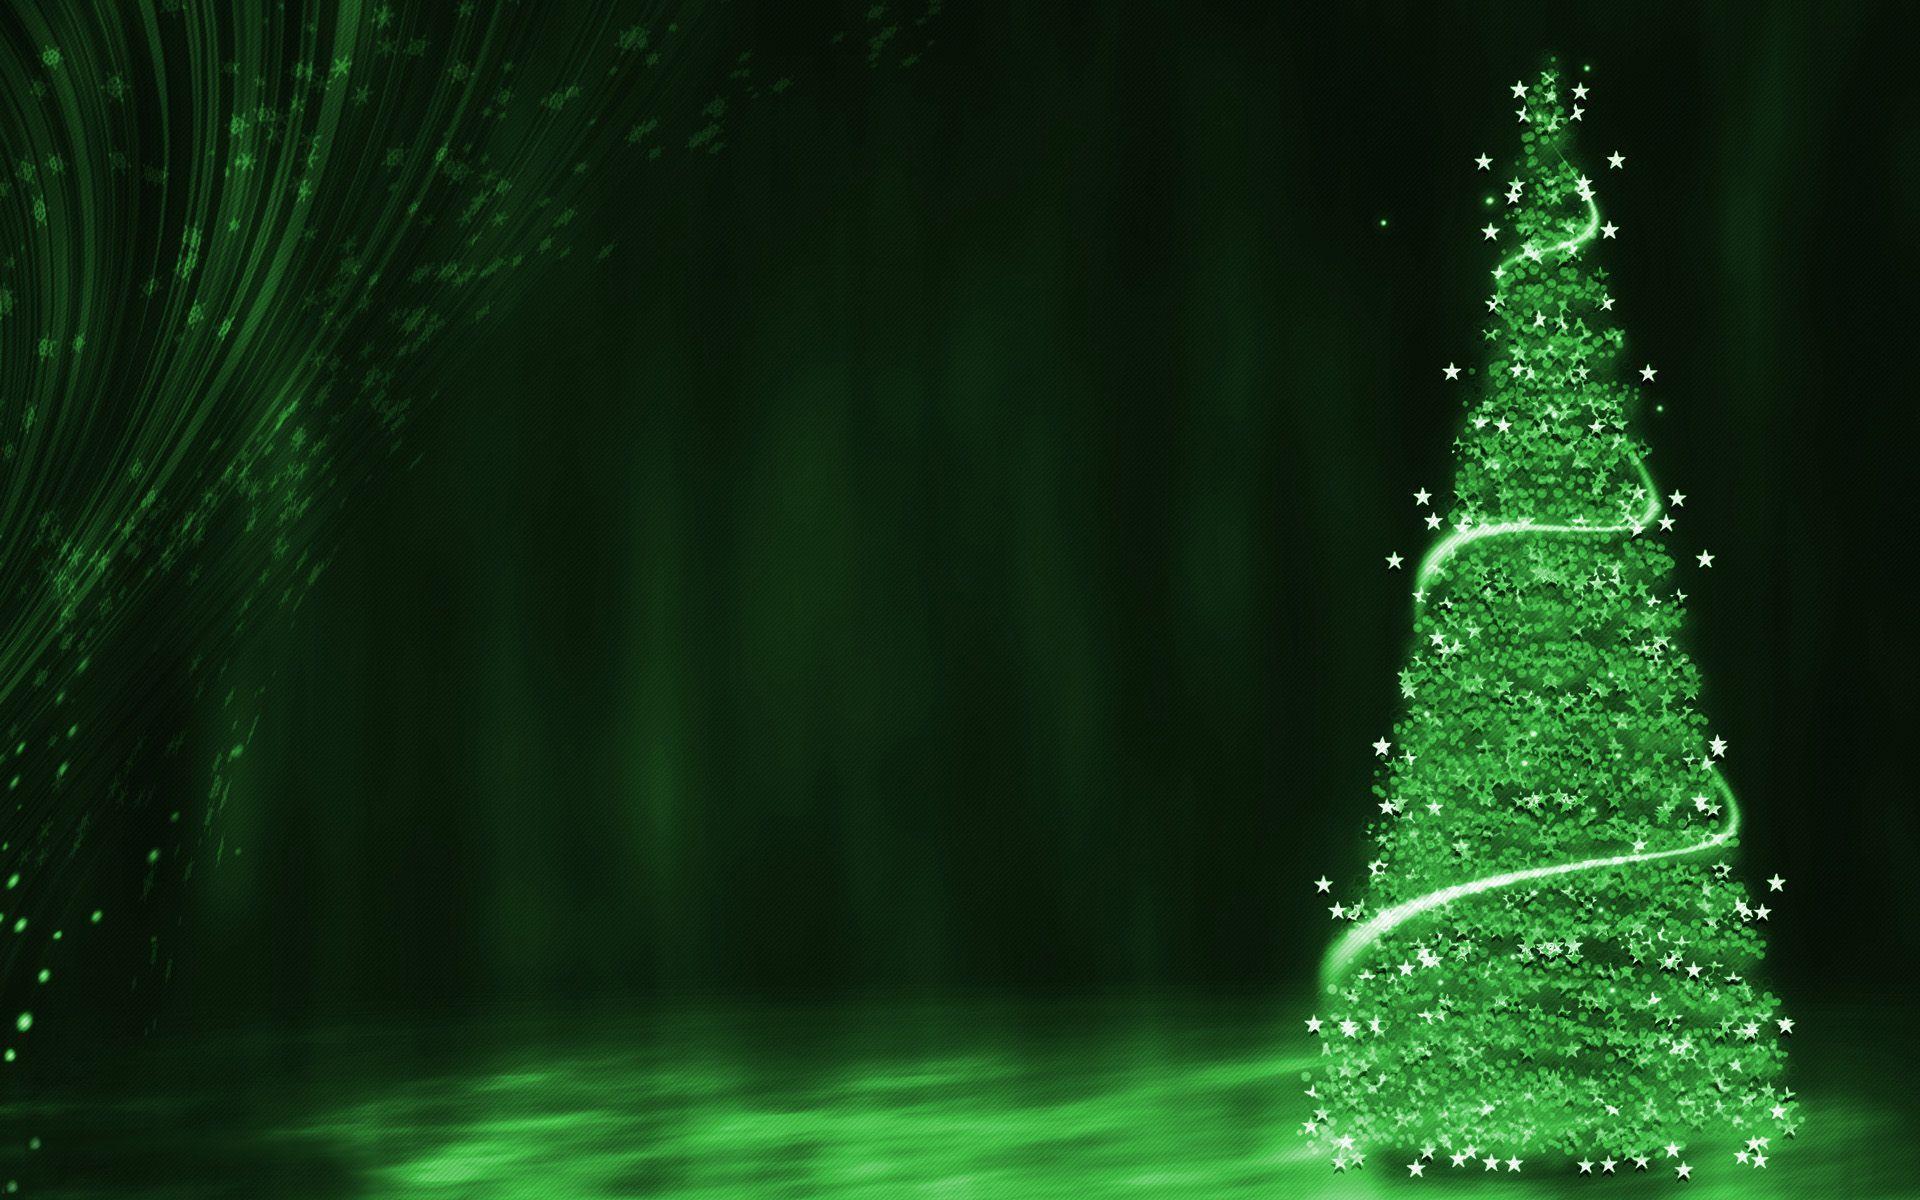 Green Christmas Tree Windows 8 Background. Windows8theme